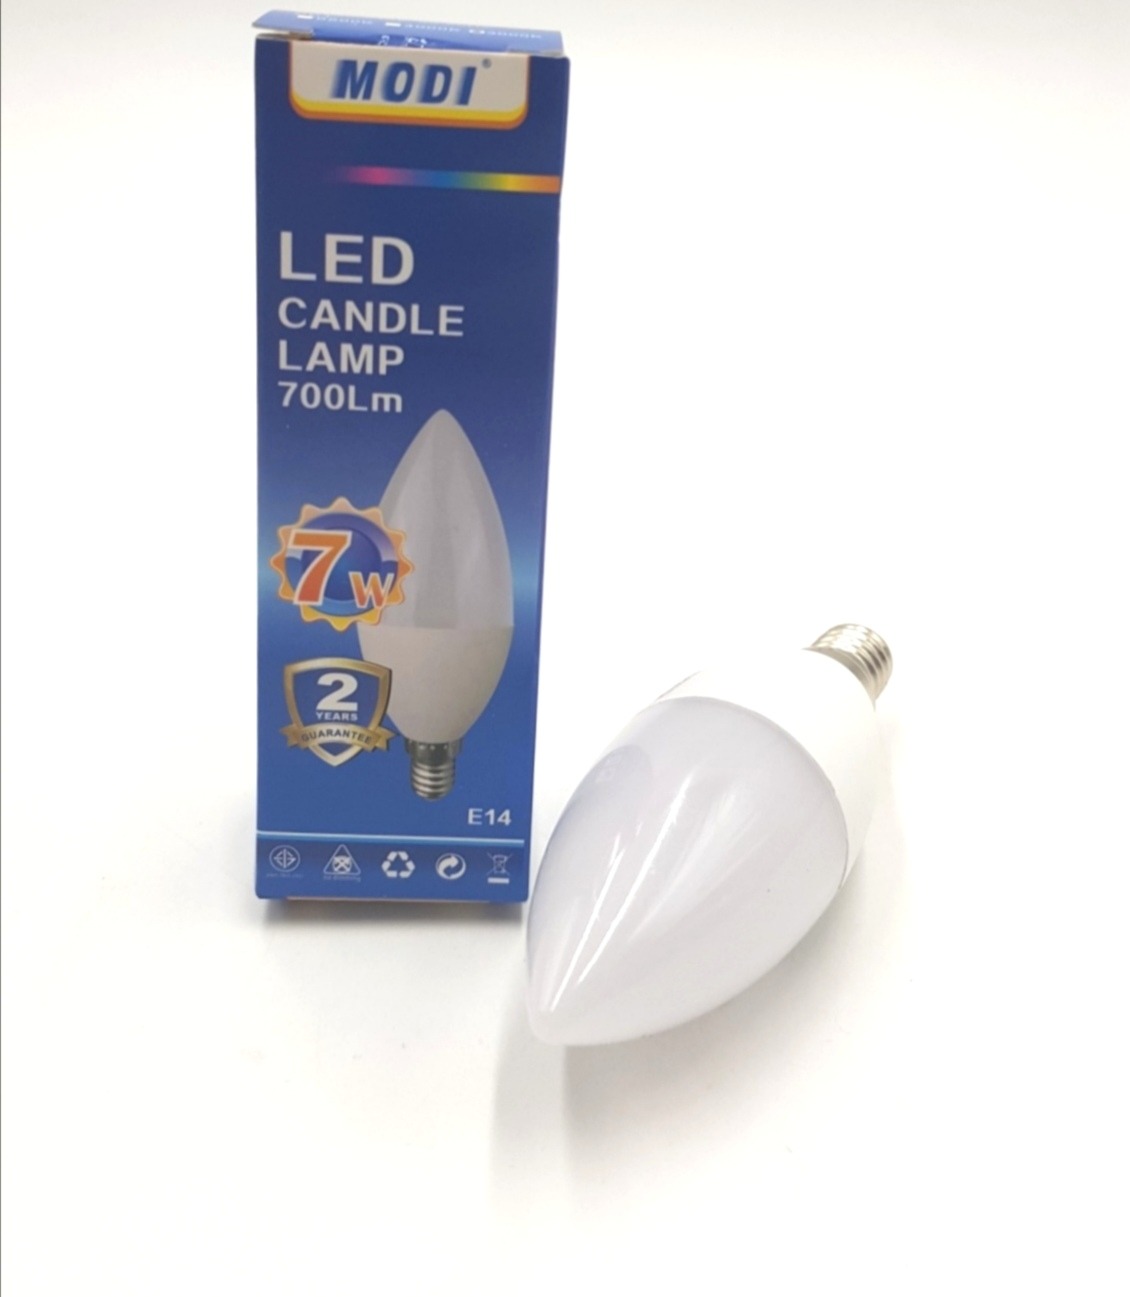 LED Candle Lamp 700 LM